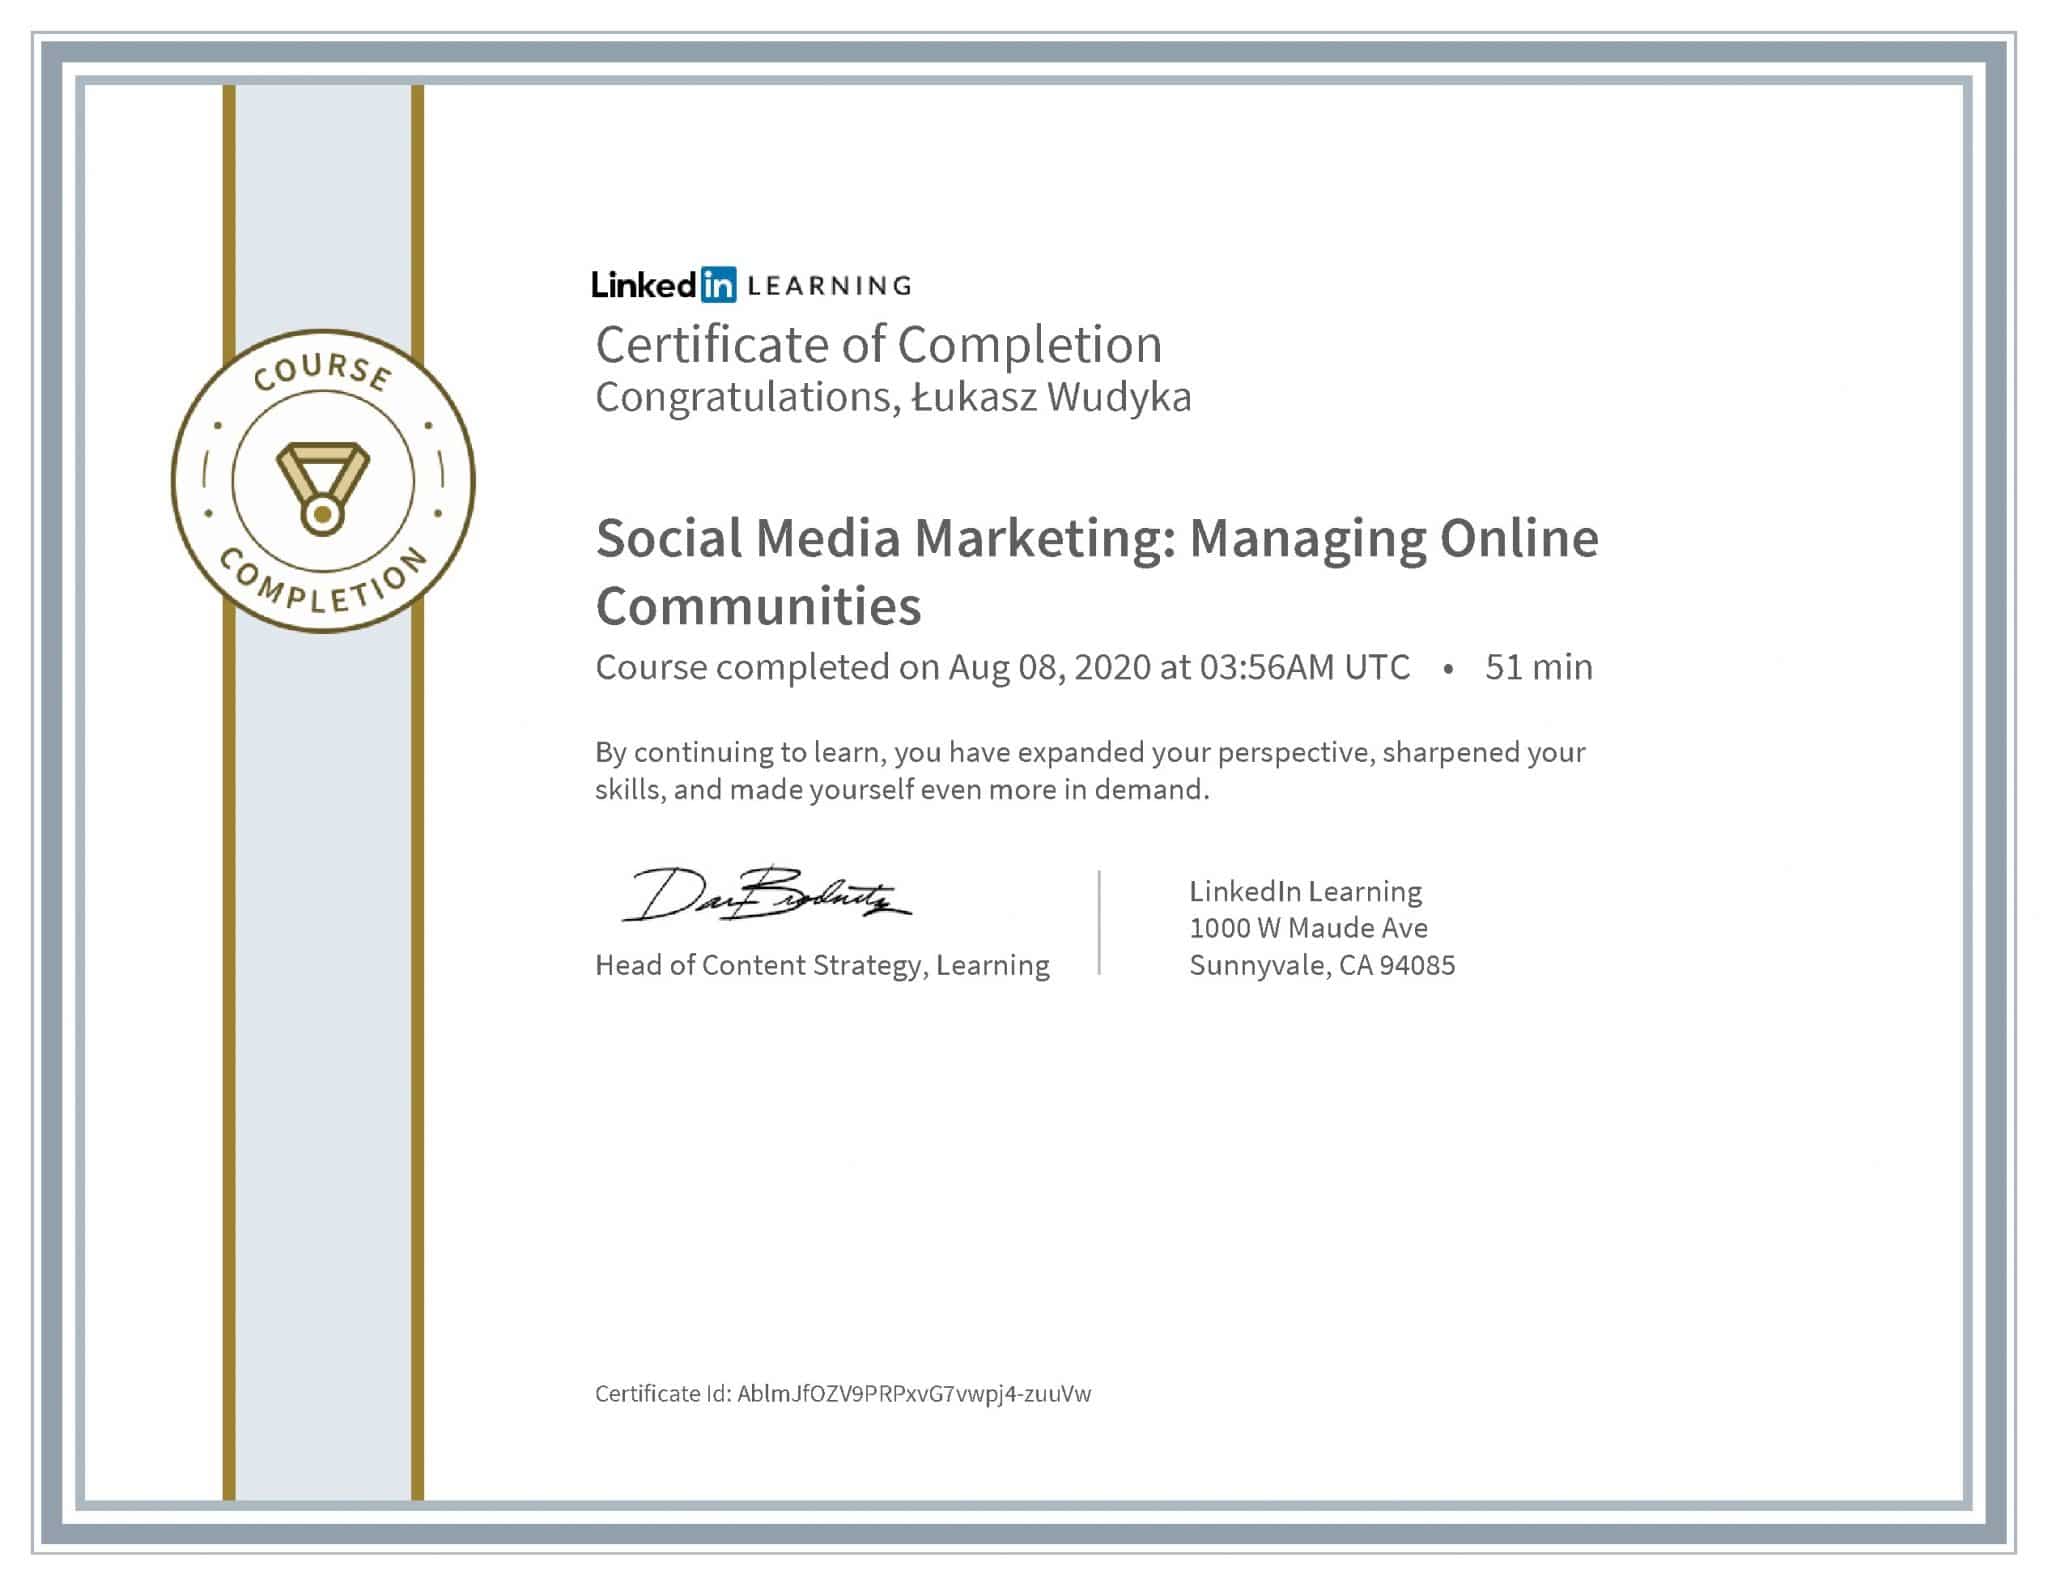 Łukasz Wudyka certyfikat LinkedIn Social Media Marketing: Managing Online Communities